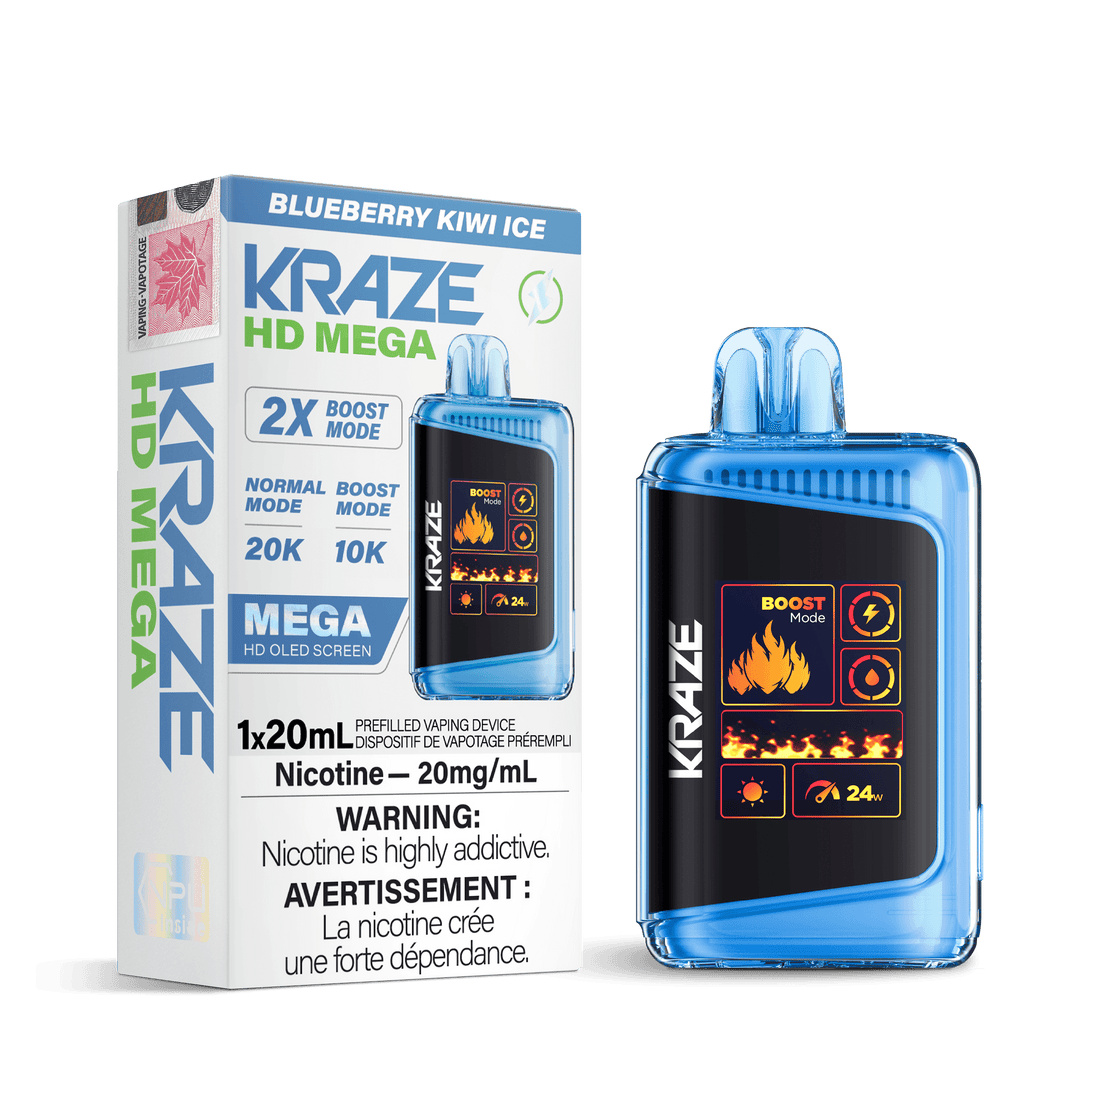 Kraze HD Mega - Blueberry Kiwi Ice - Vapor Shoppe